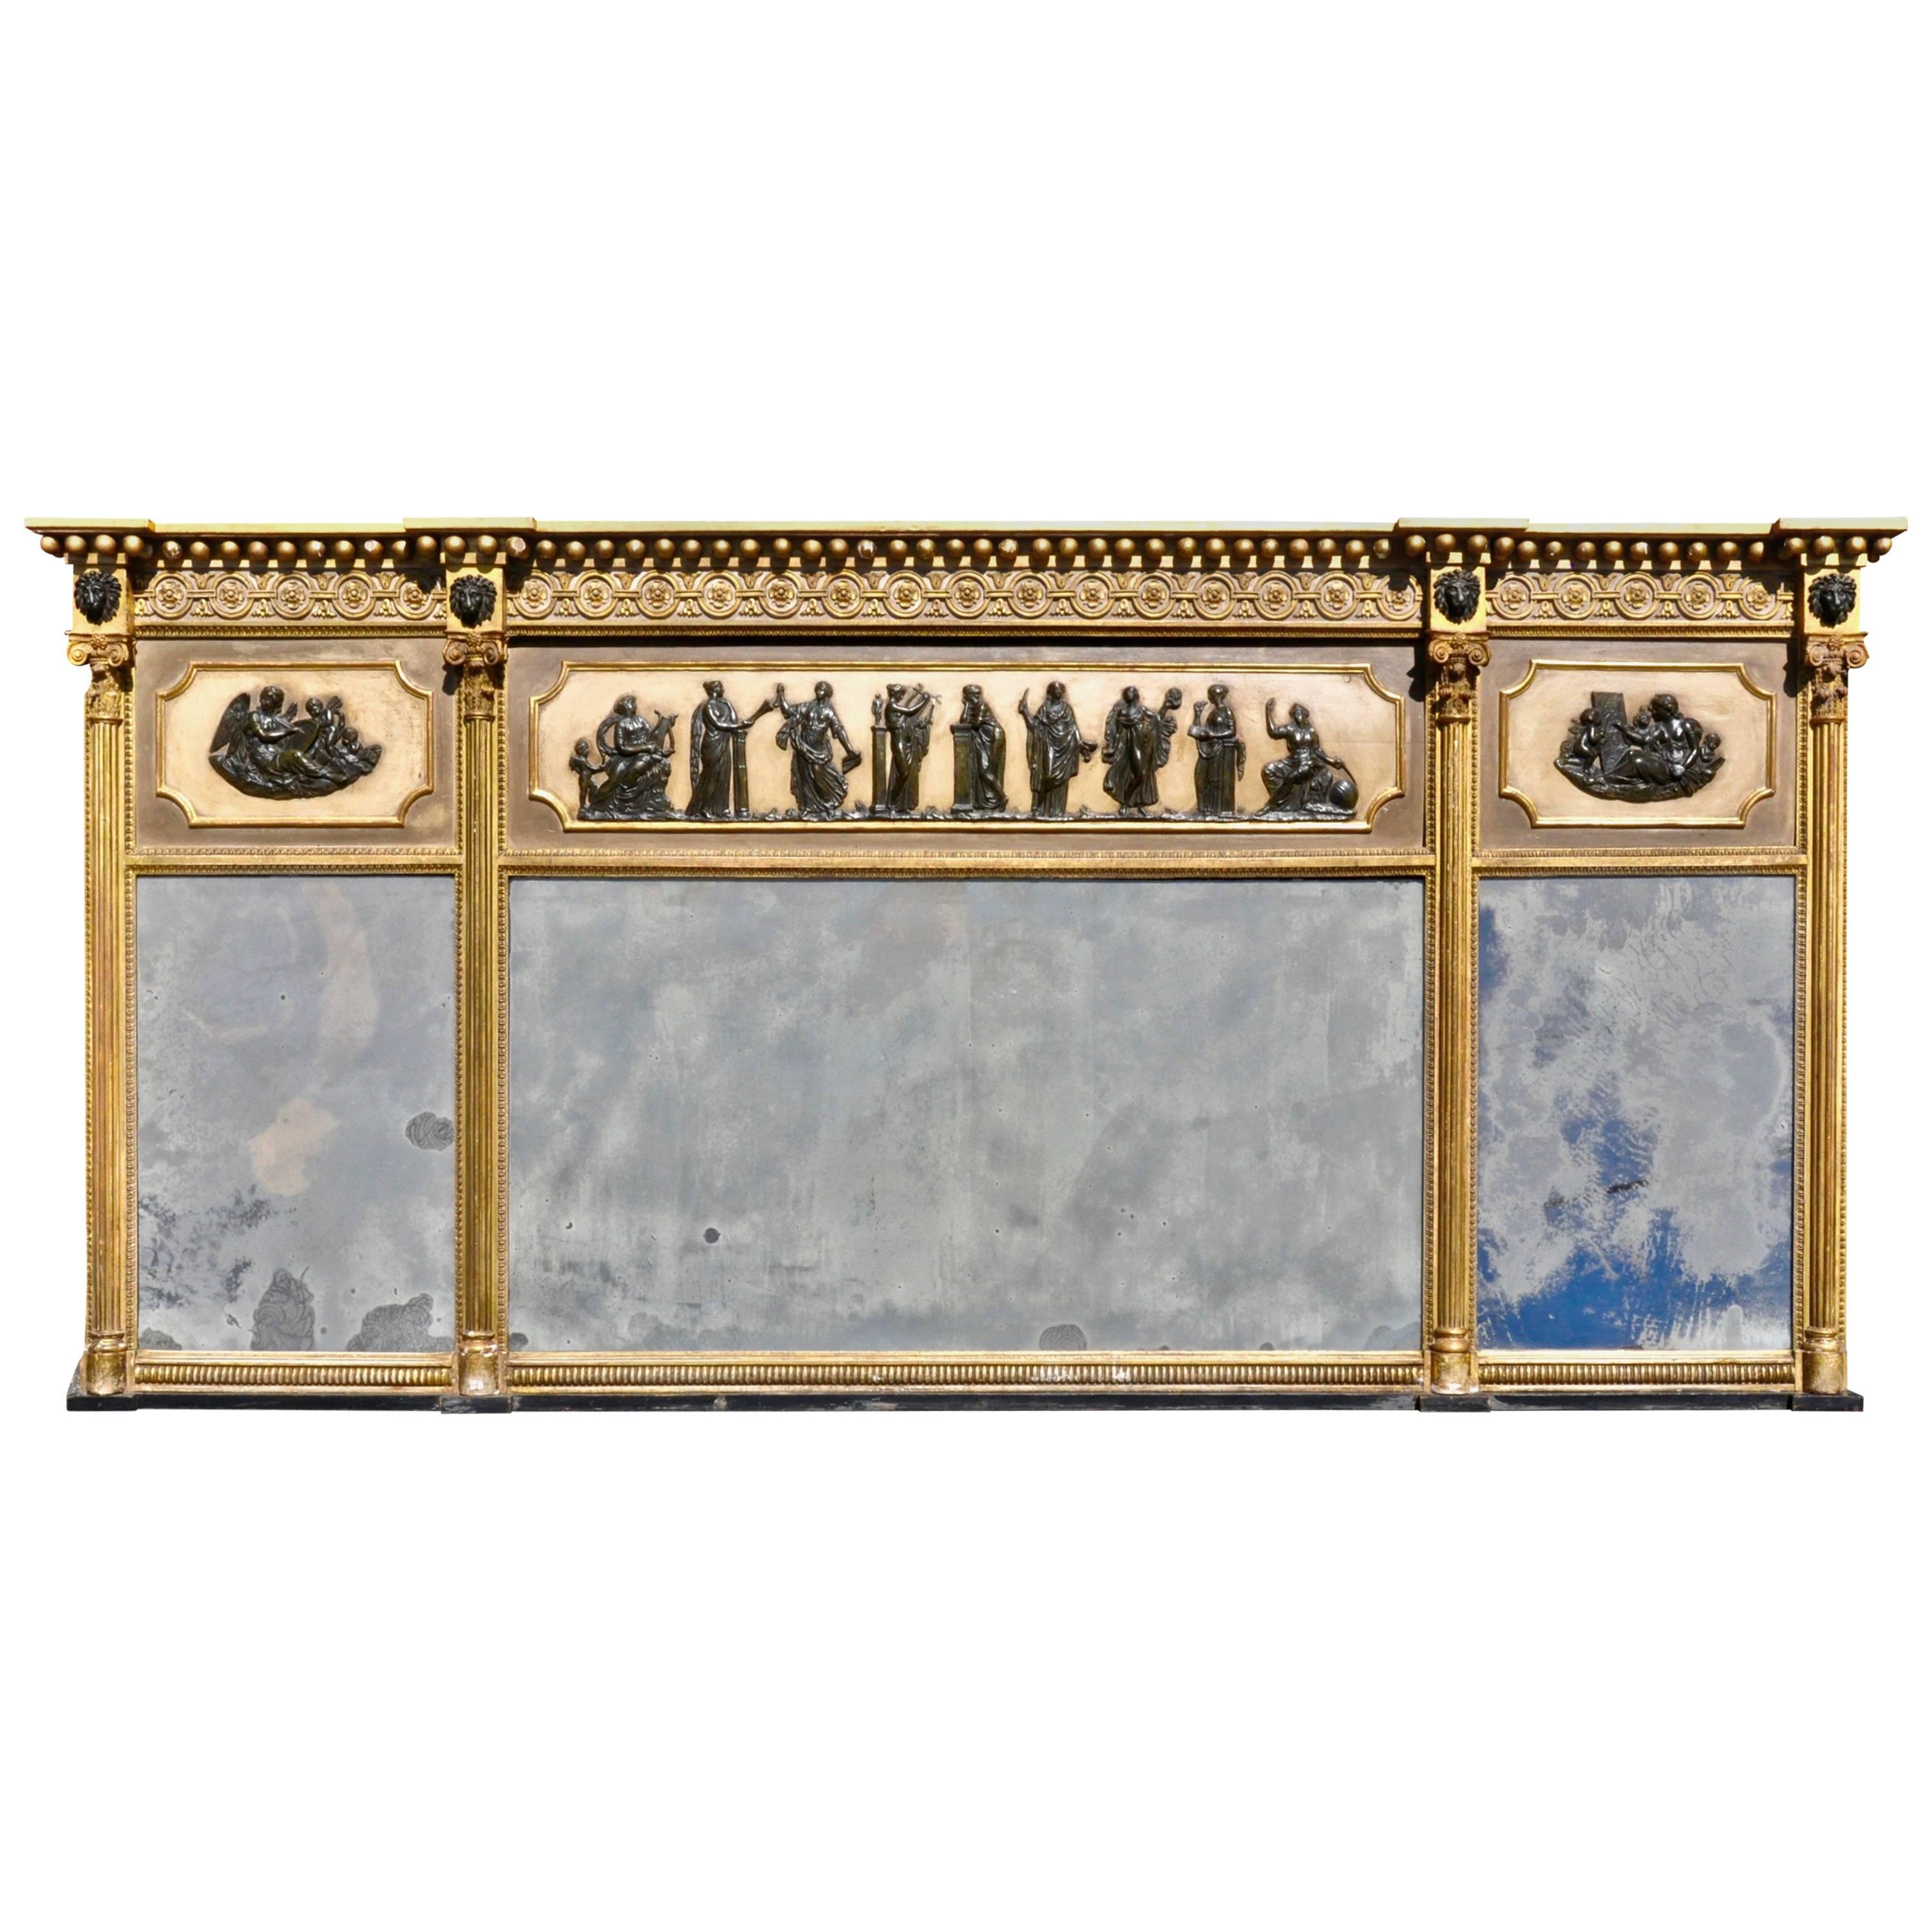 Period Regency Neoclassical Overmantel Mirror, All Original